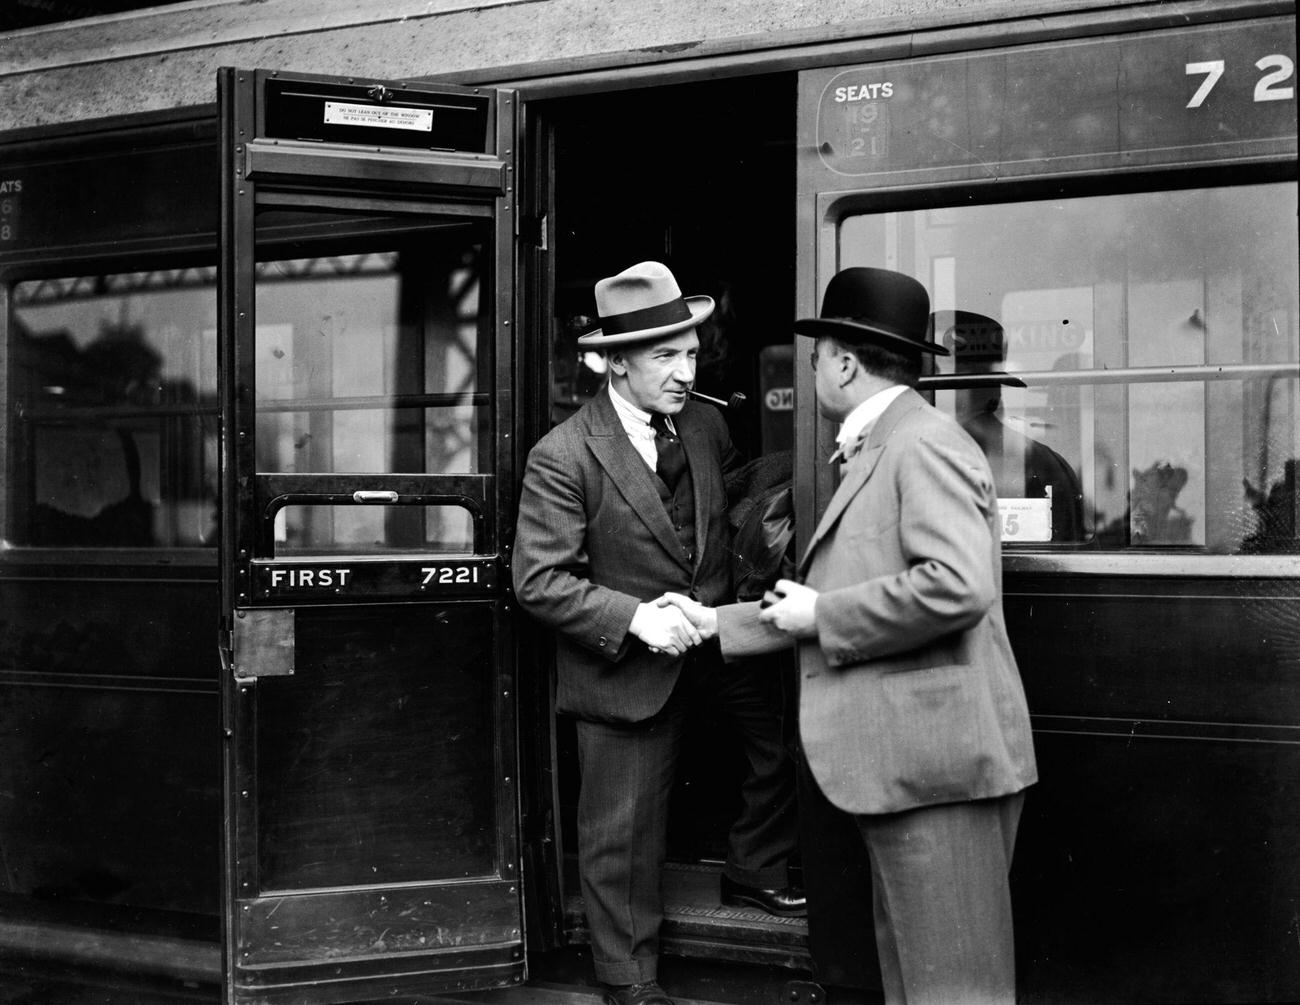 Douglas Hamilton greeting Sir Harry Lauder as he leaves a train at Waterloo Station, London, 1928